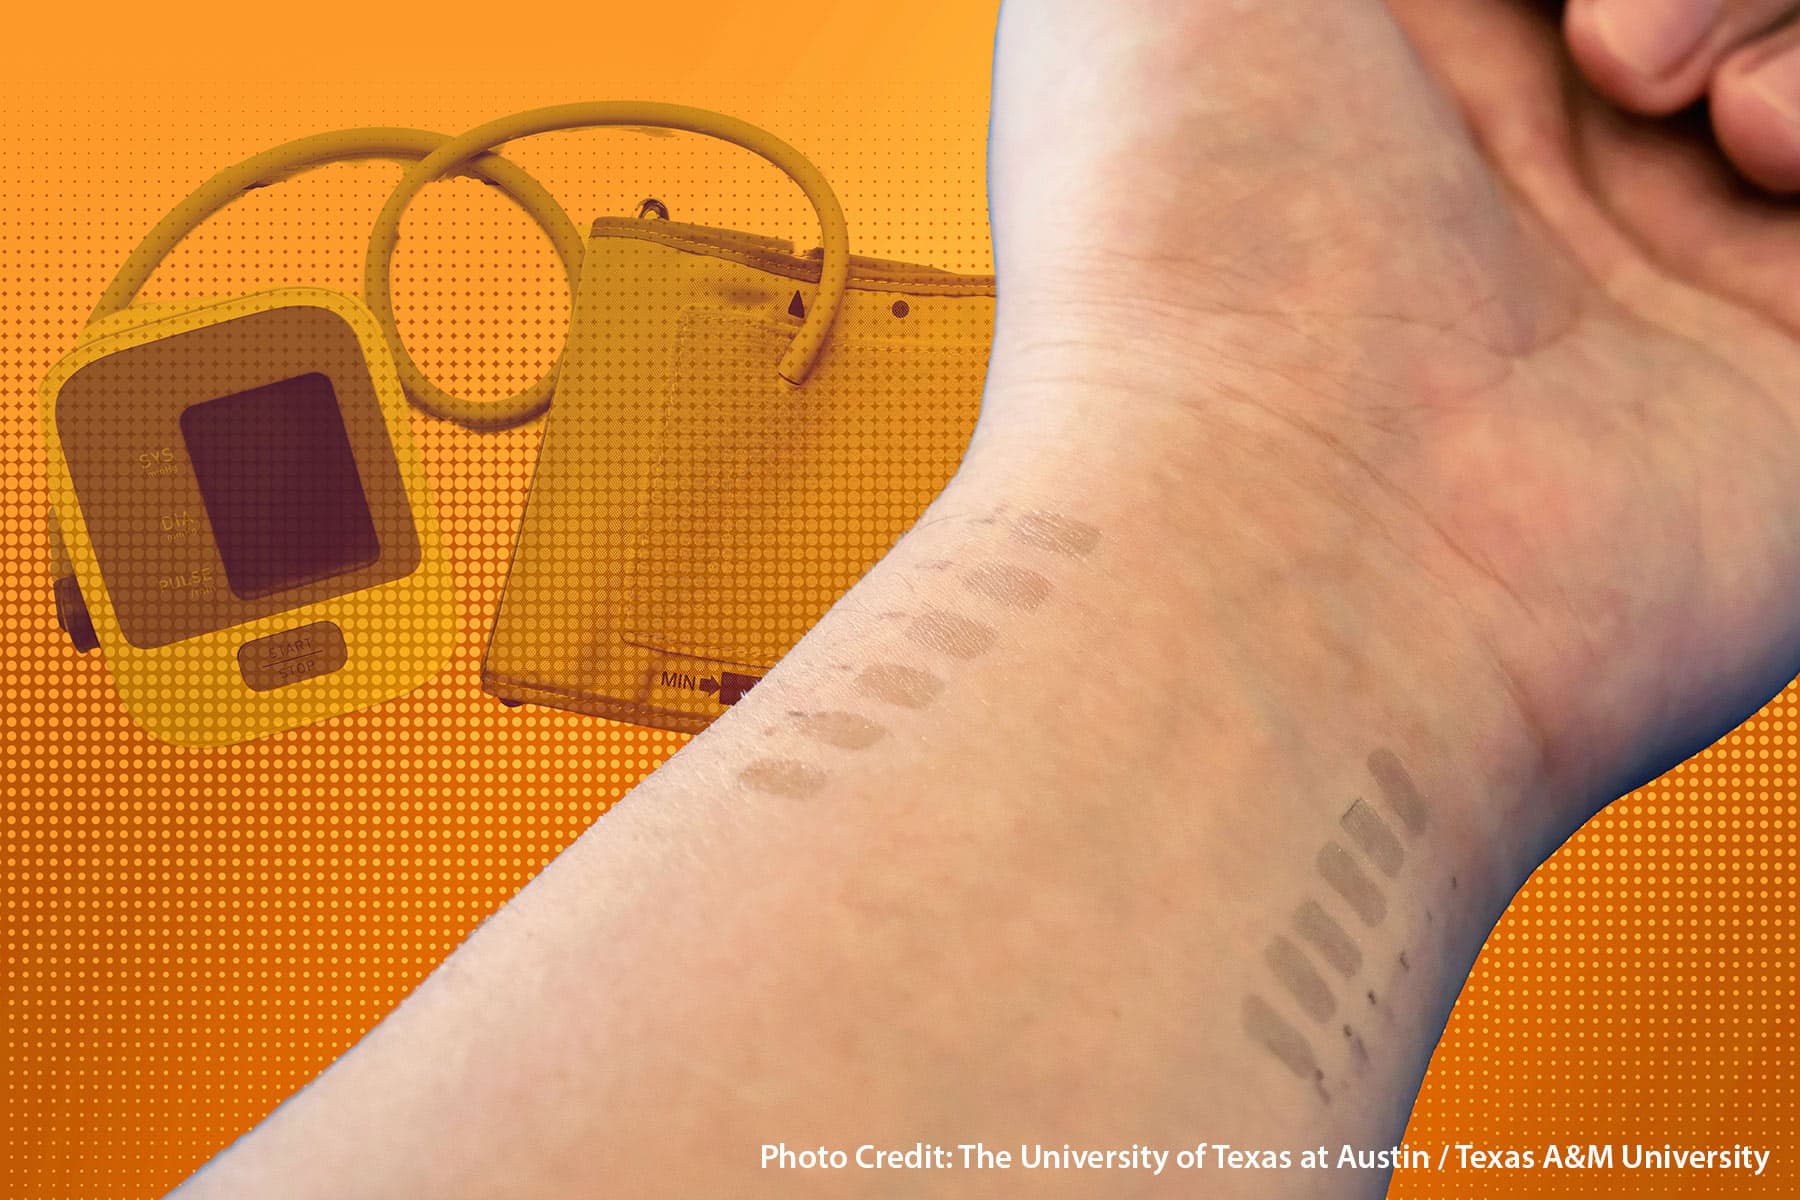 The Next Blood Pressure Breakthrough: Temporary Tattoos